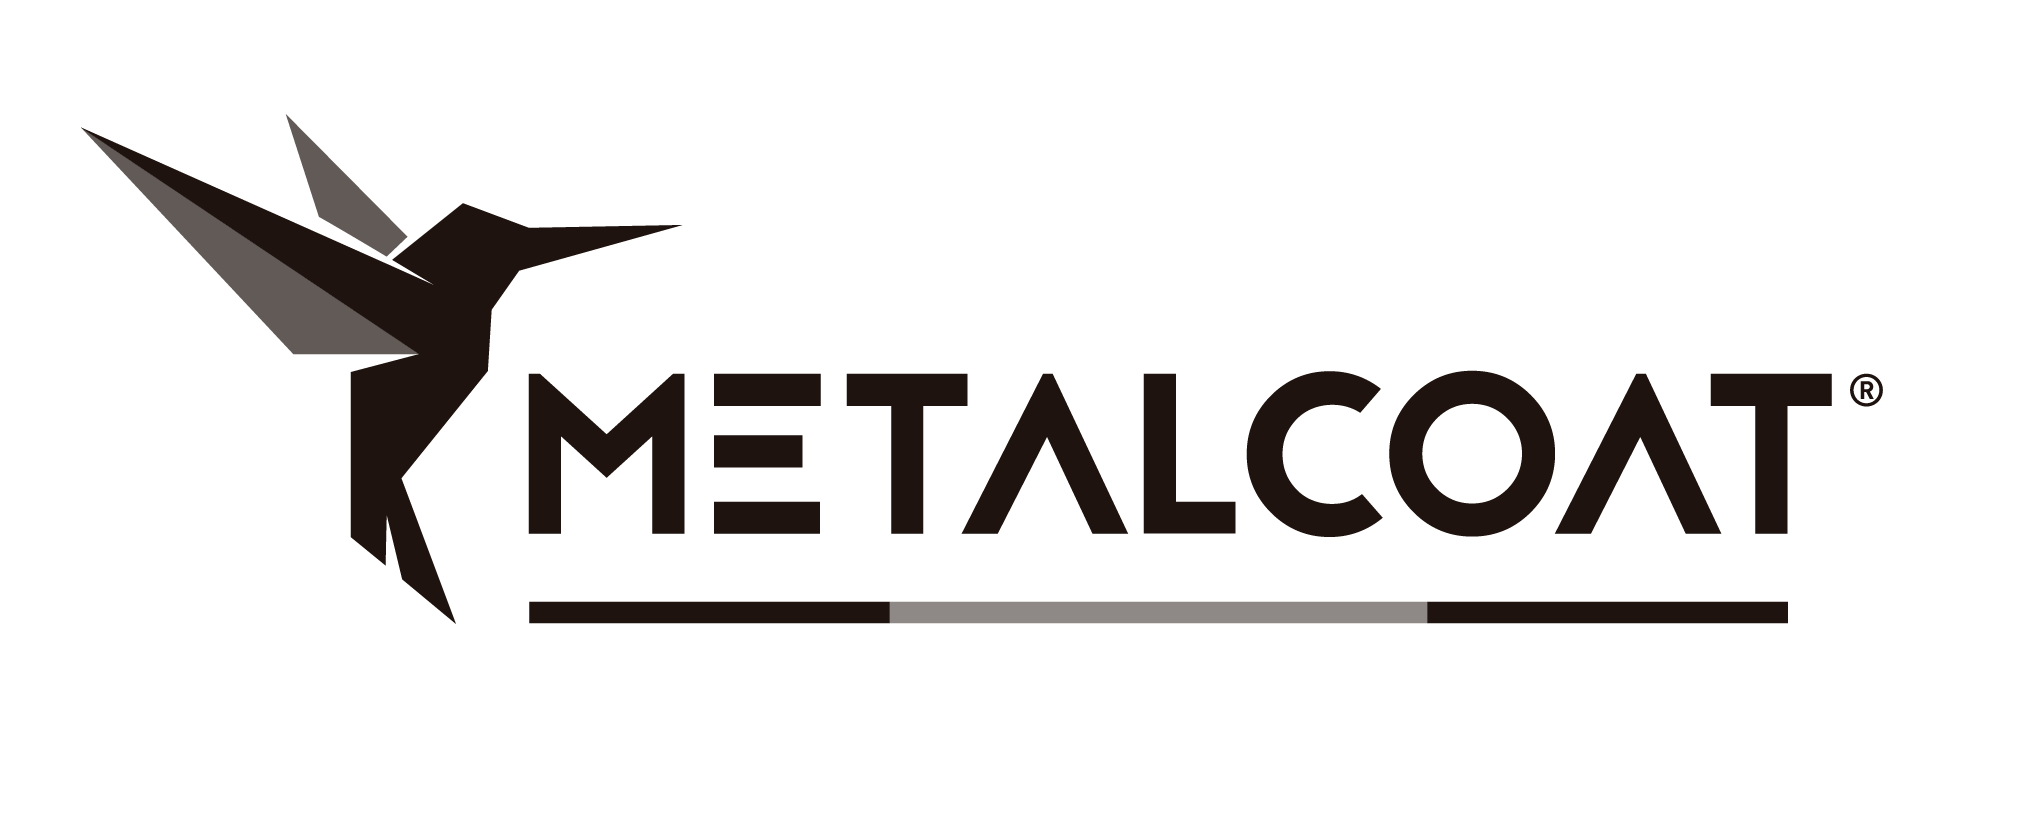 Metalcoat_Logo_tricolore_Tavola disegno 1 copia 7